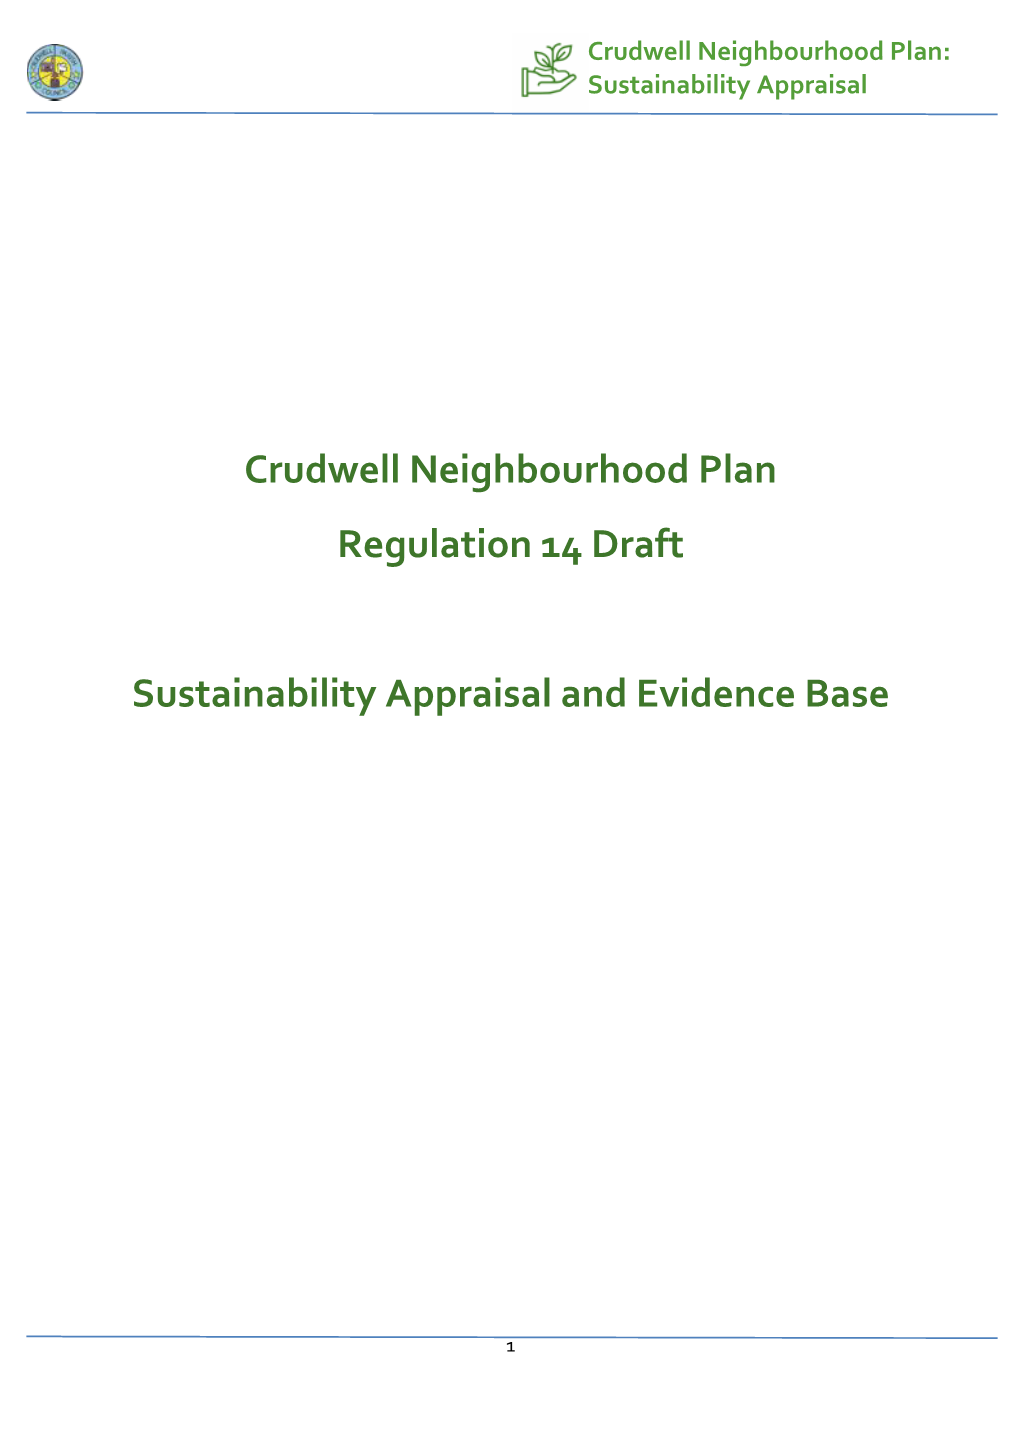 Crudwell Neighbourhood Plan Regulation 14 Draft Sustainability